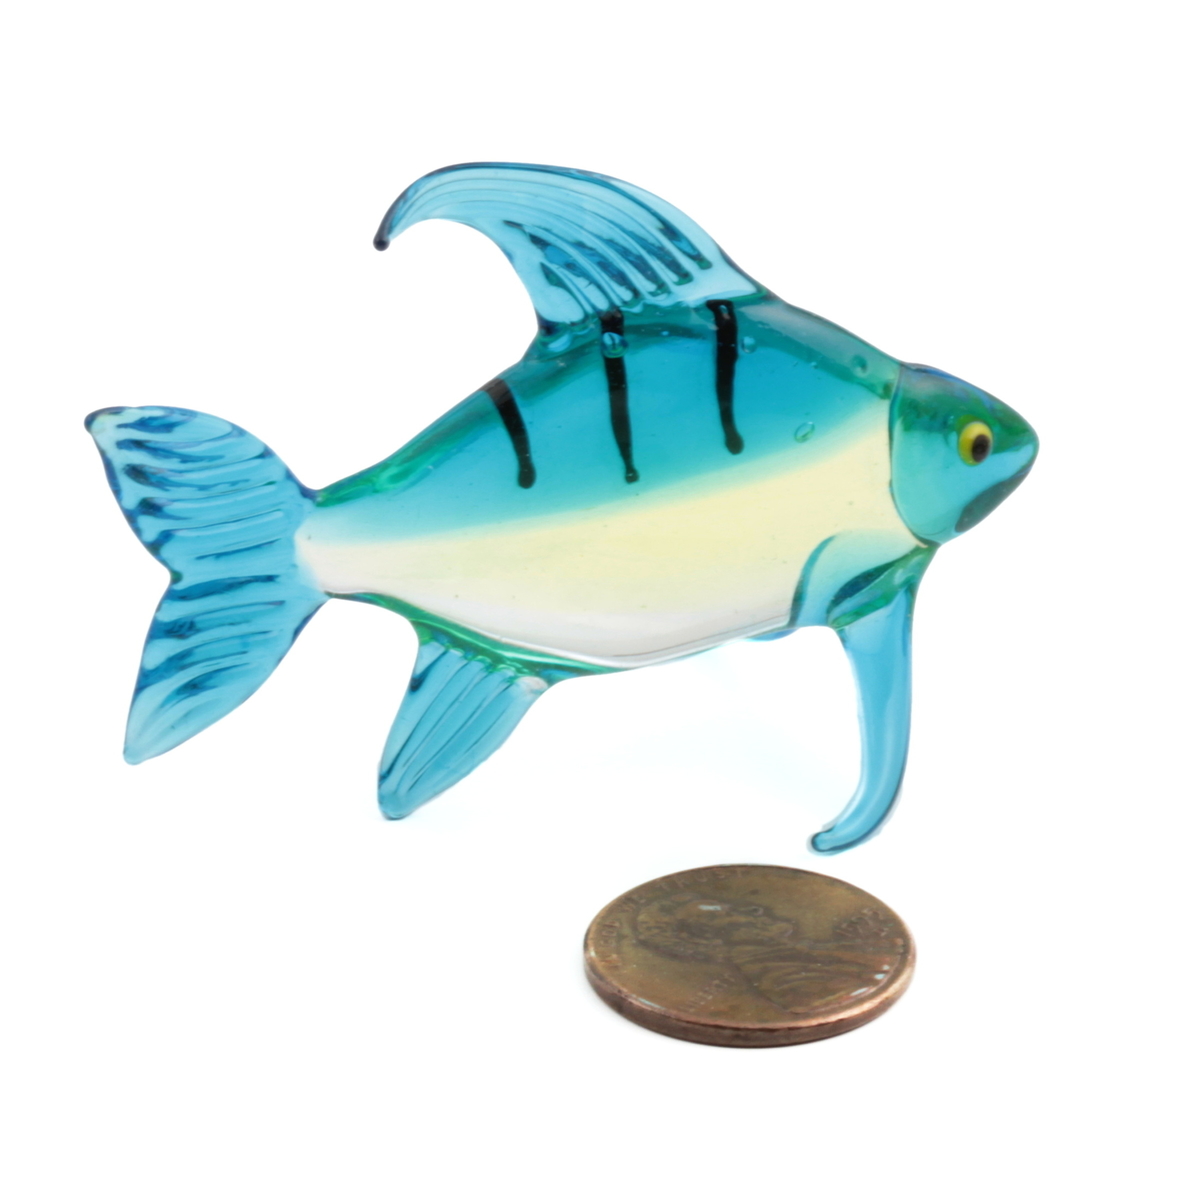 Czech lampwork glass blue tropical fish miniature figurine decoration ornament